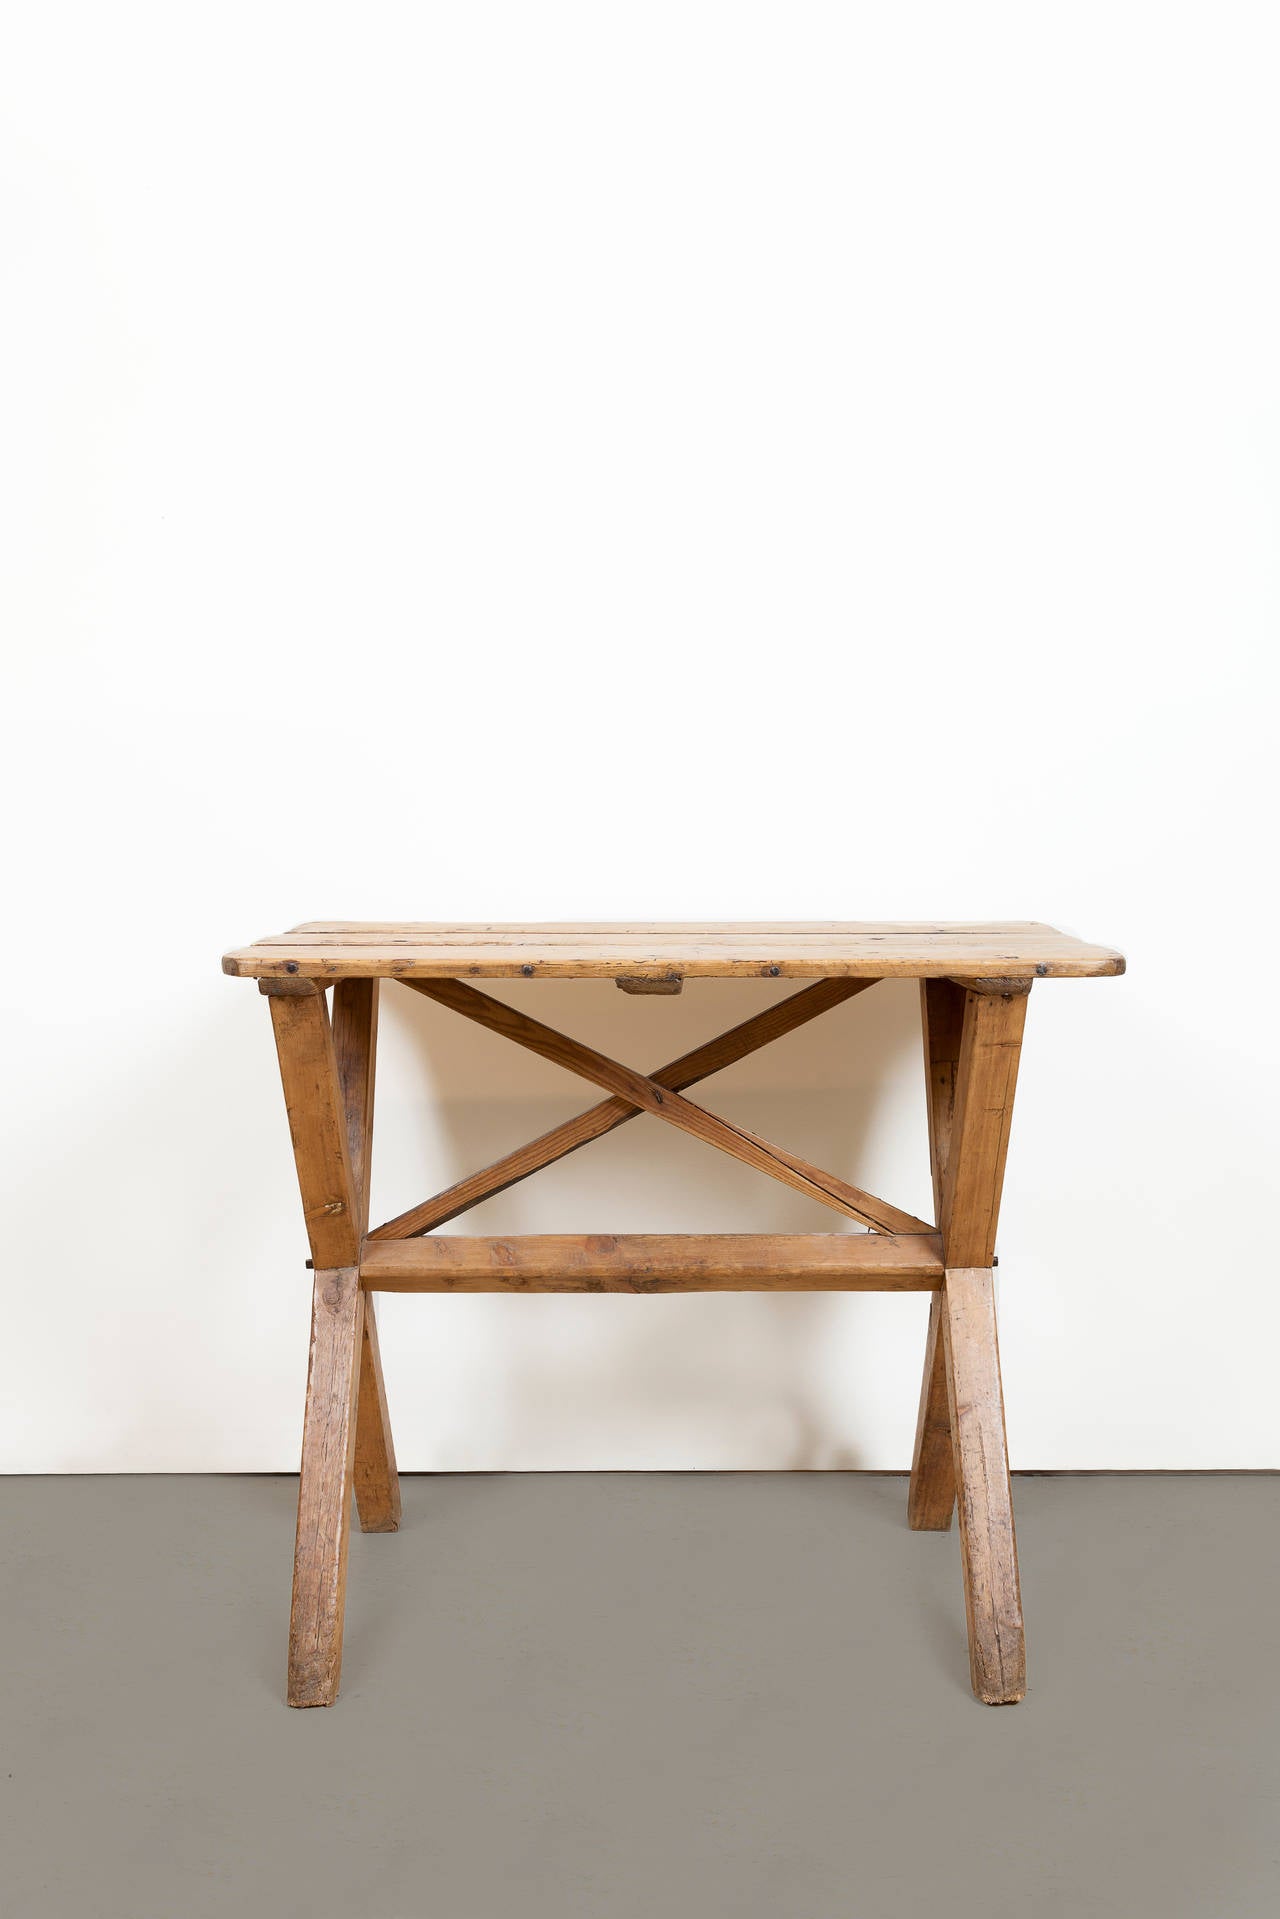 Late 19th Century Trestle Work Table. Wonderful patina.